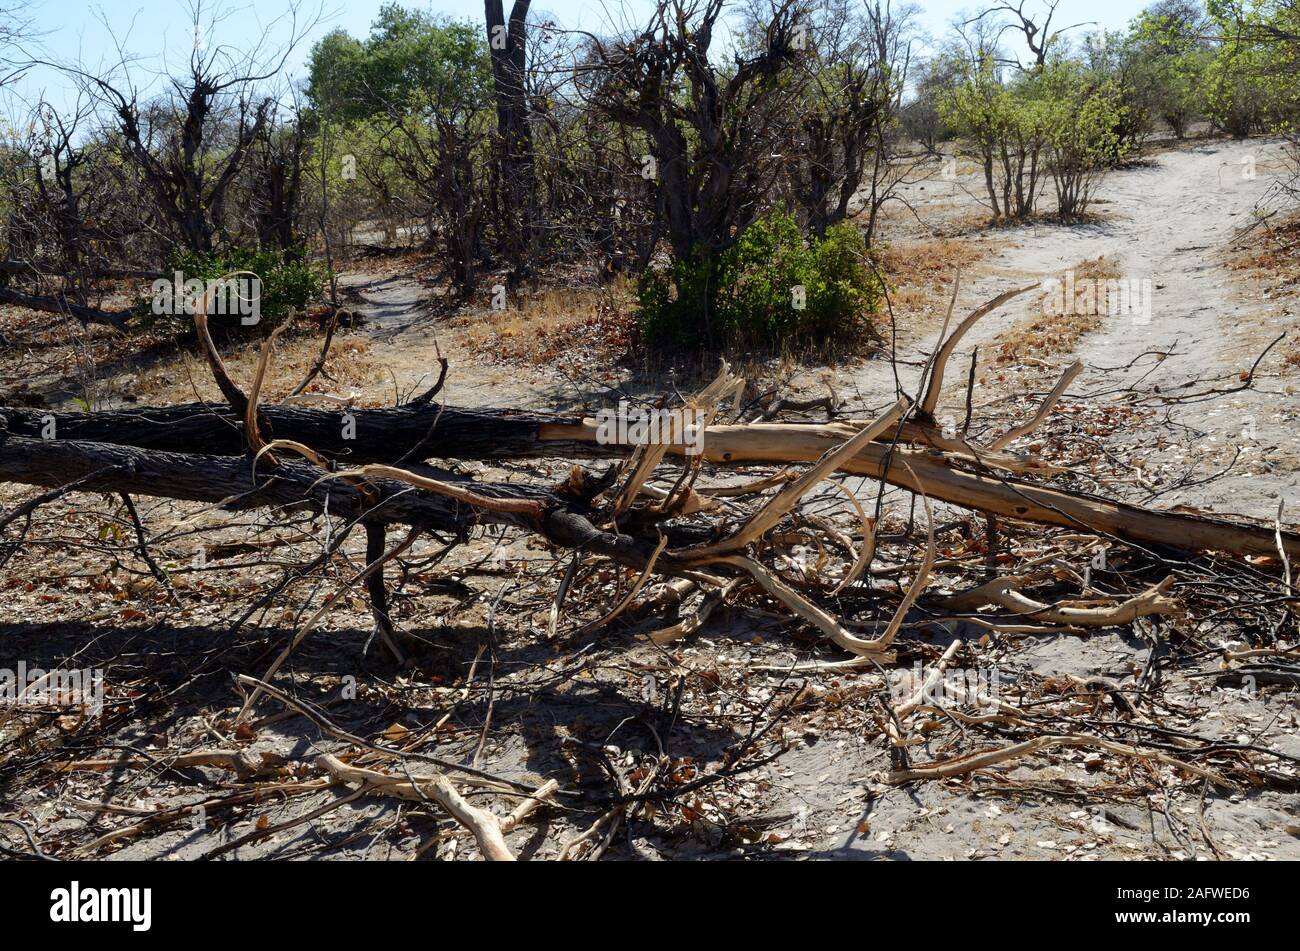 Danni al tree Moamai parco nazionale causato da elefanti Botswana Africa Foto Stock